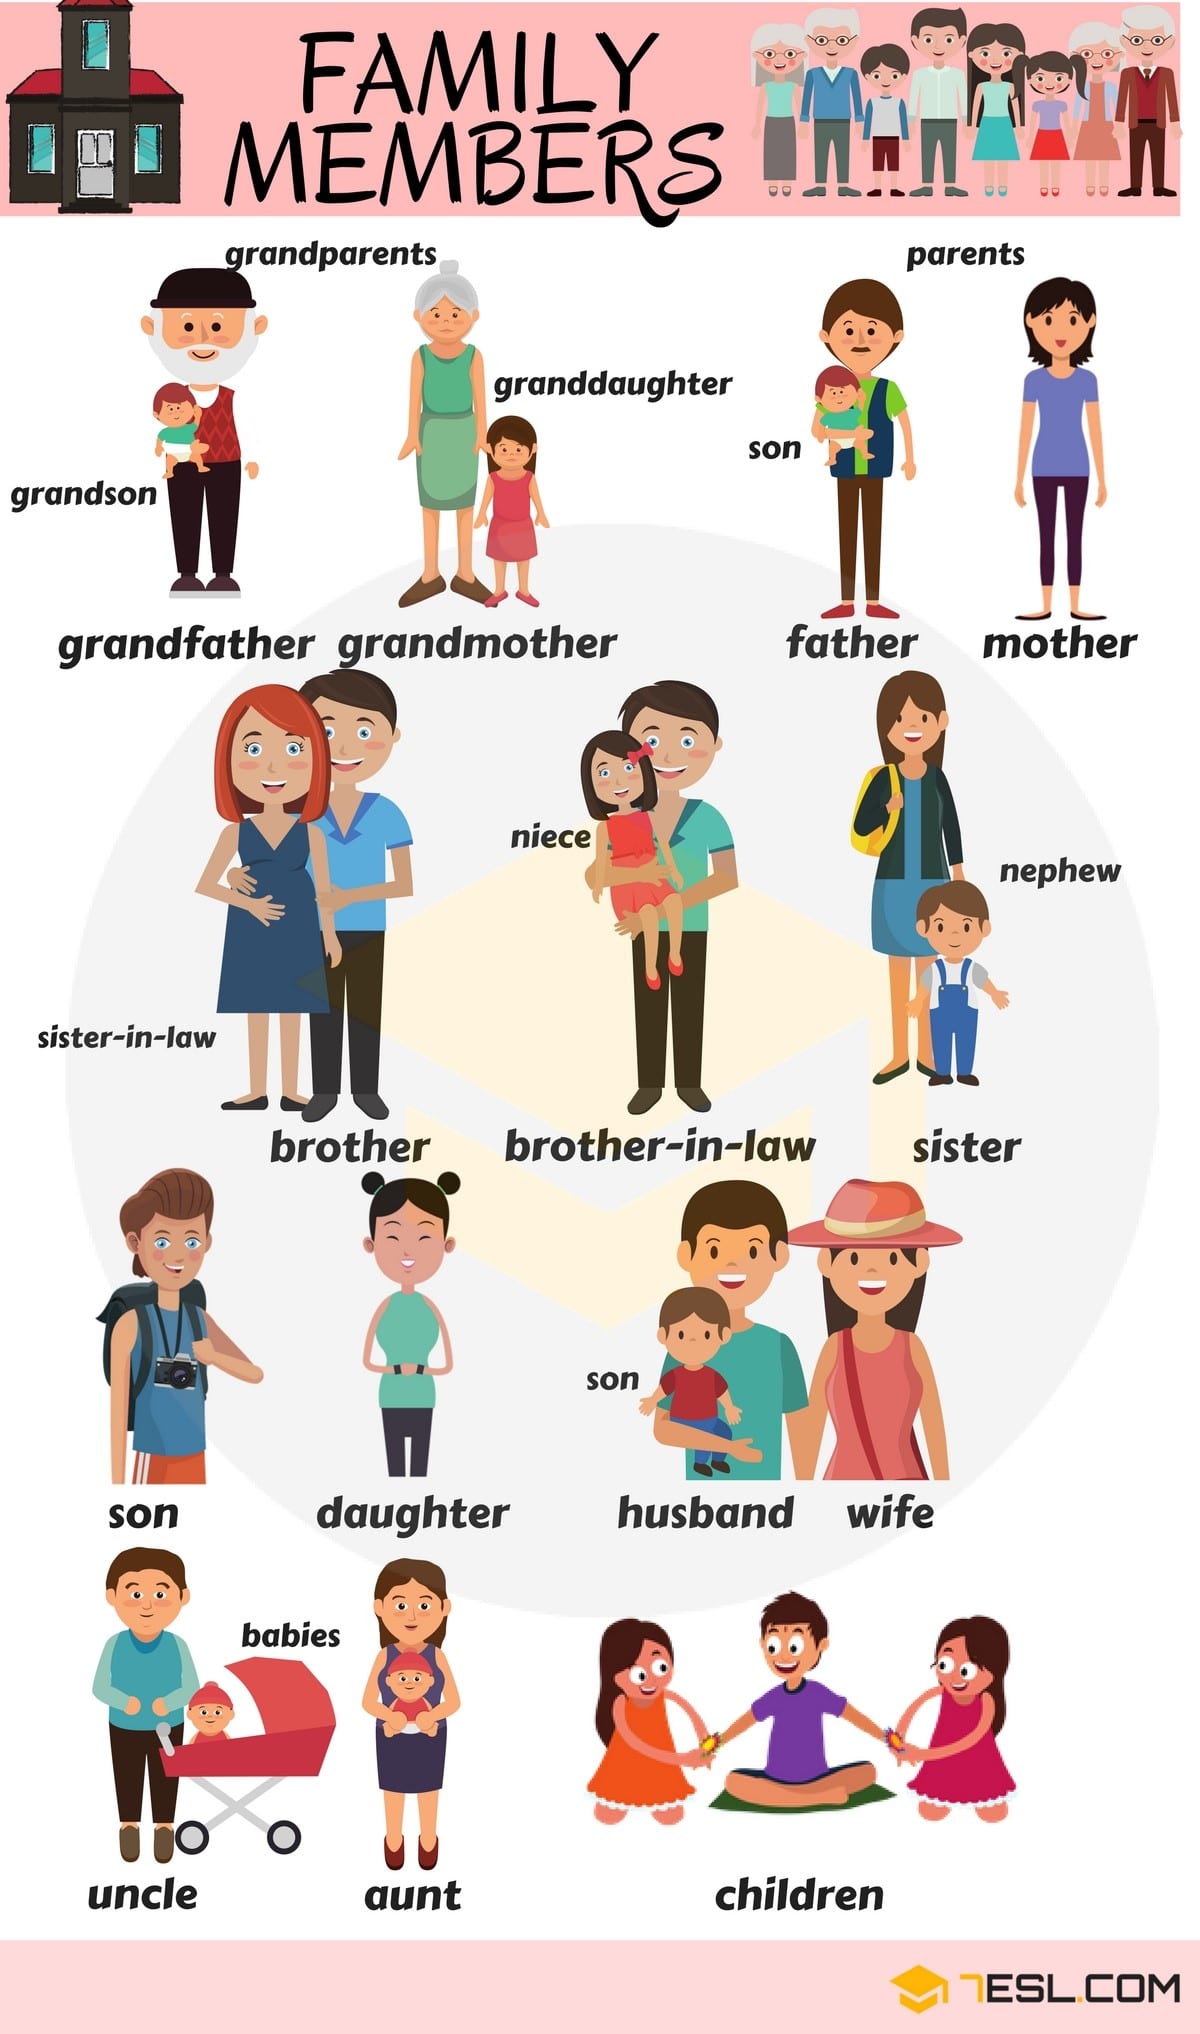 Members of the Family Vocabulary | Family Members Tree - 7 E S L